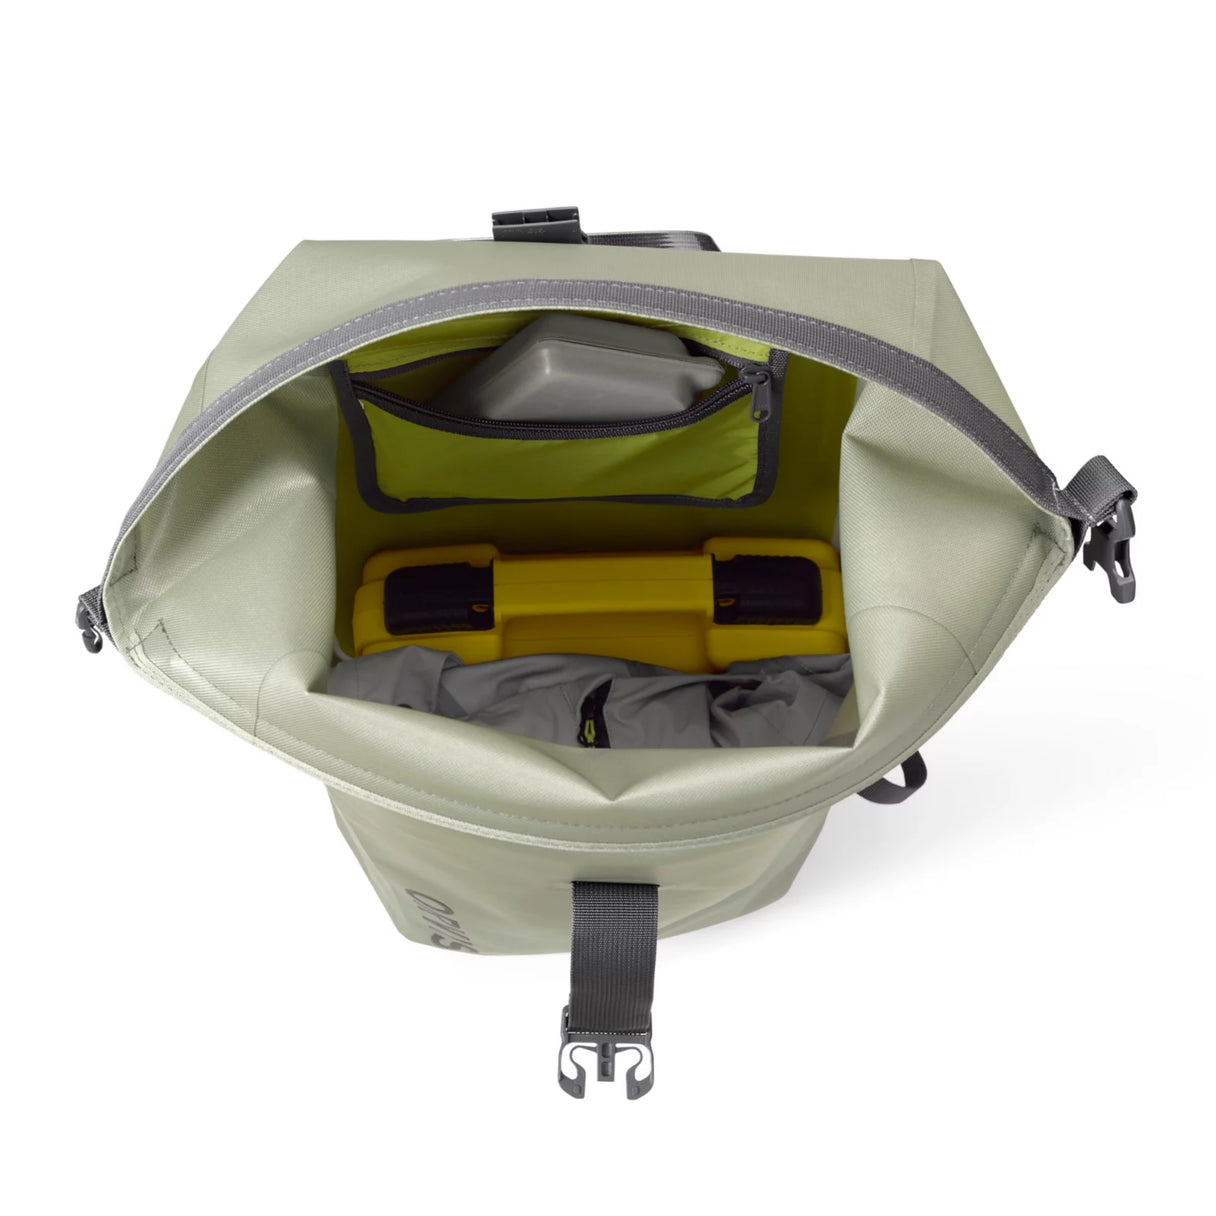 Orvis - Pro Waterproof Roll Top Backpack 20L